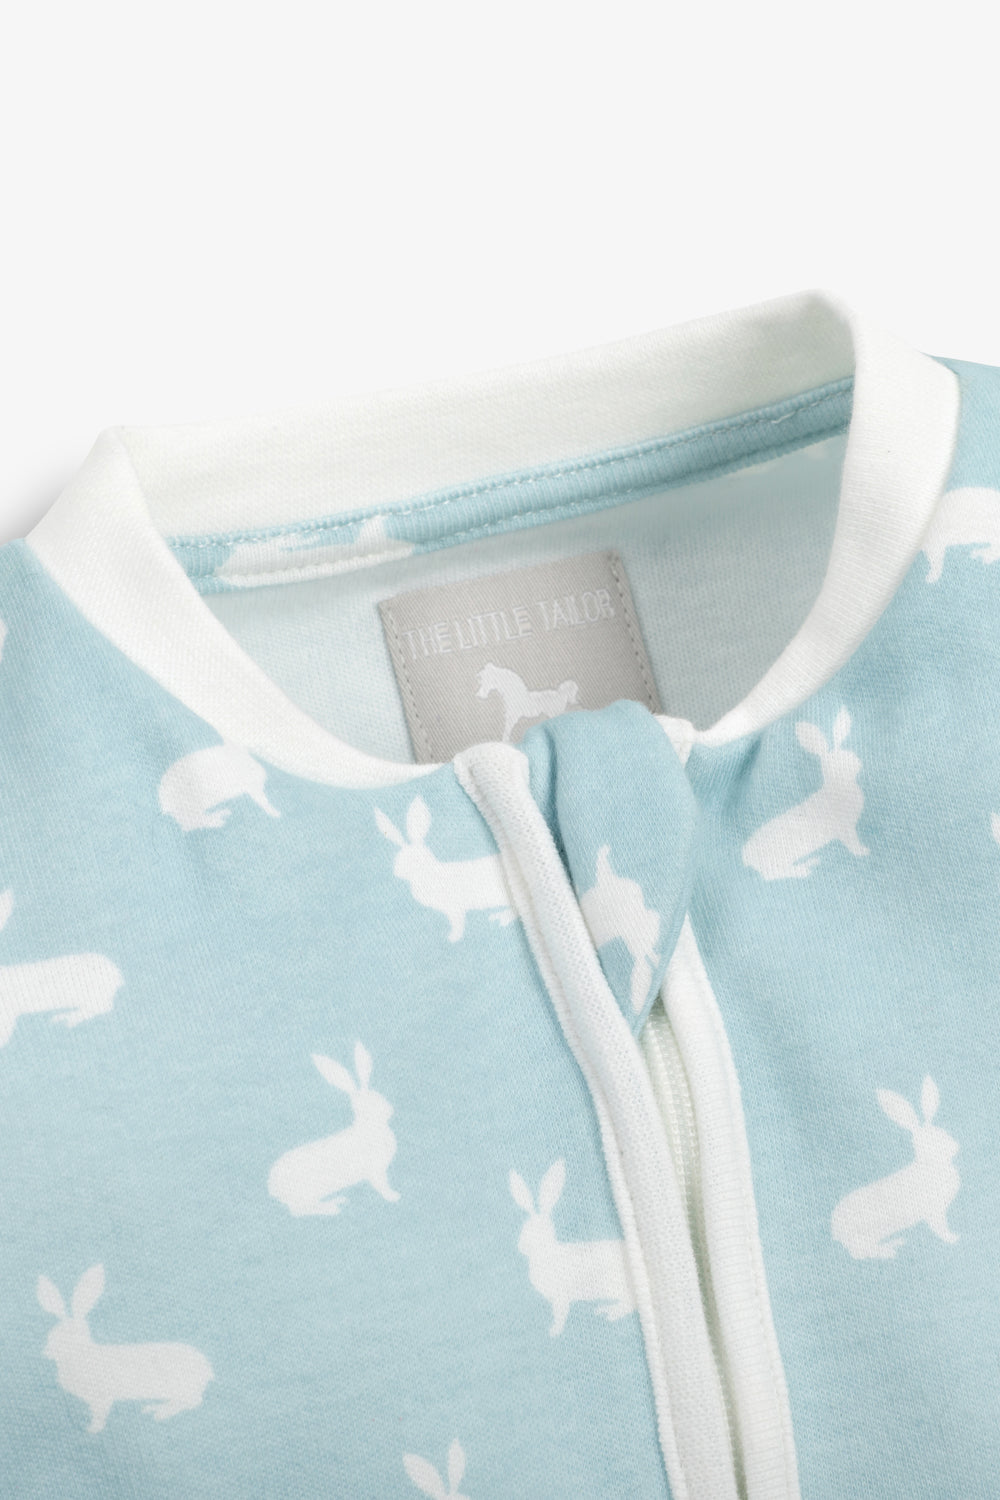 Sleepsuit/Onesie, sky blue hare print